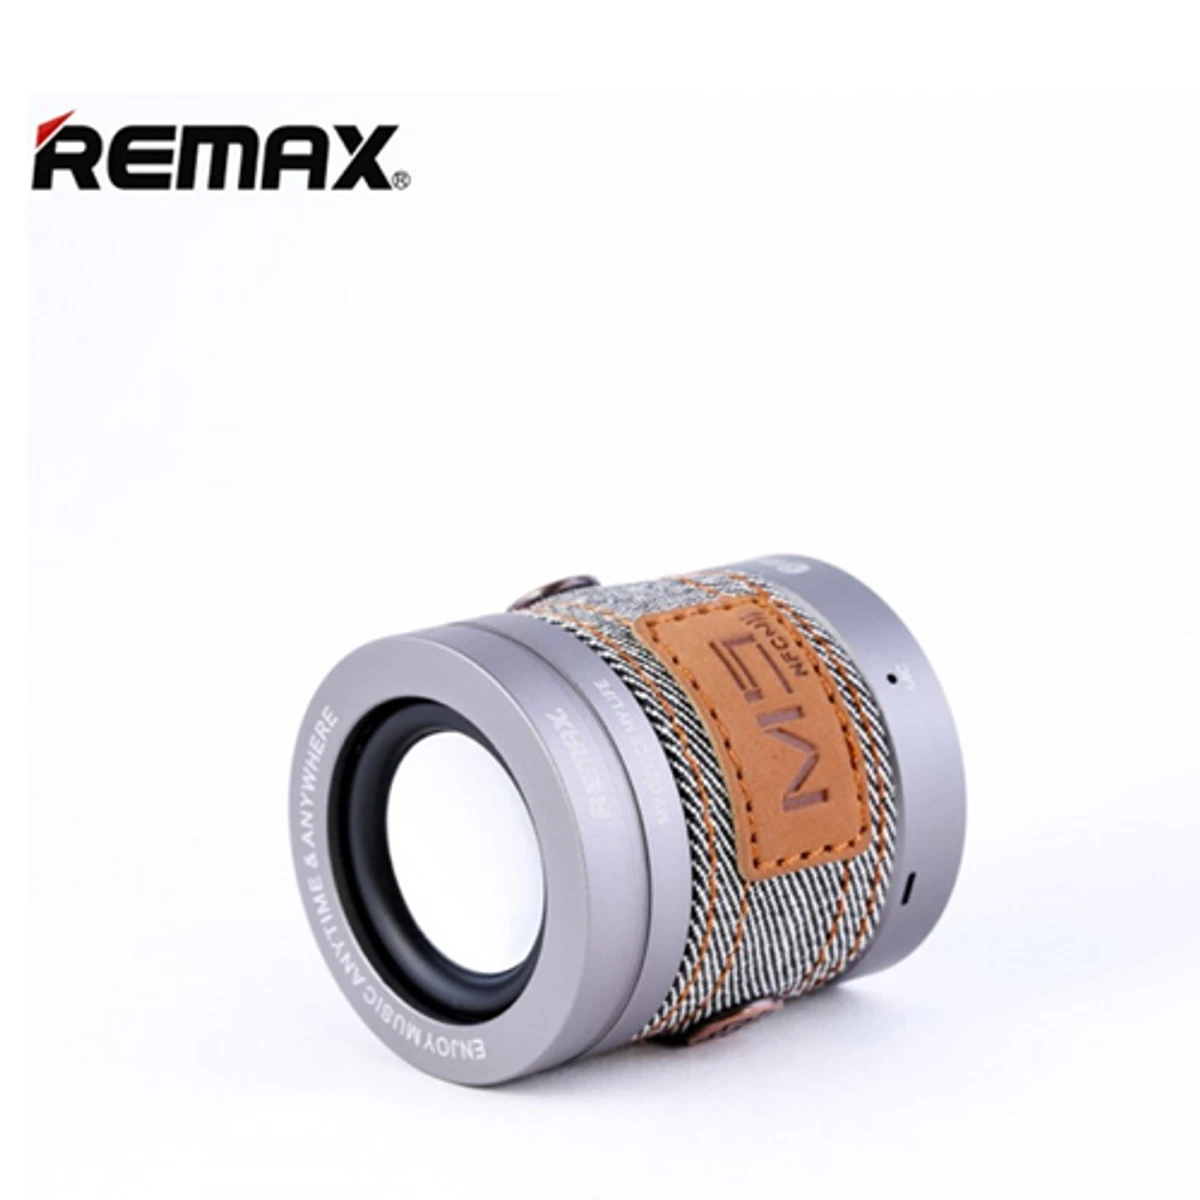 Wireless Speaker By Remax (RB M5)